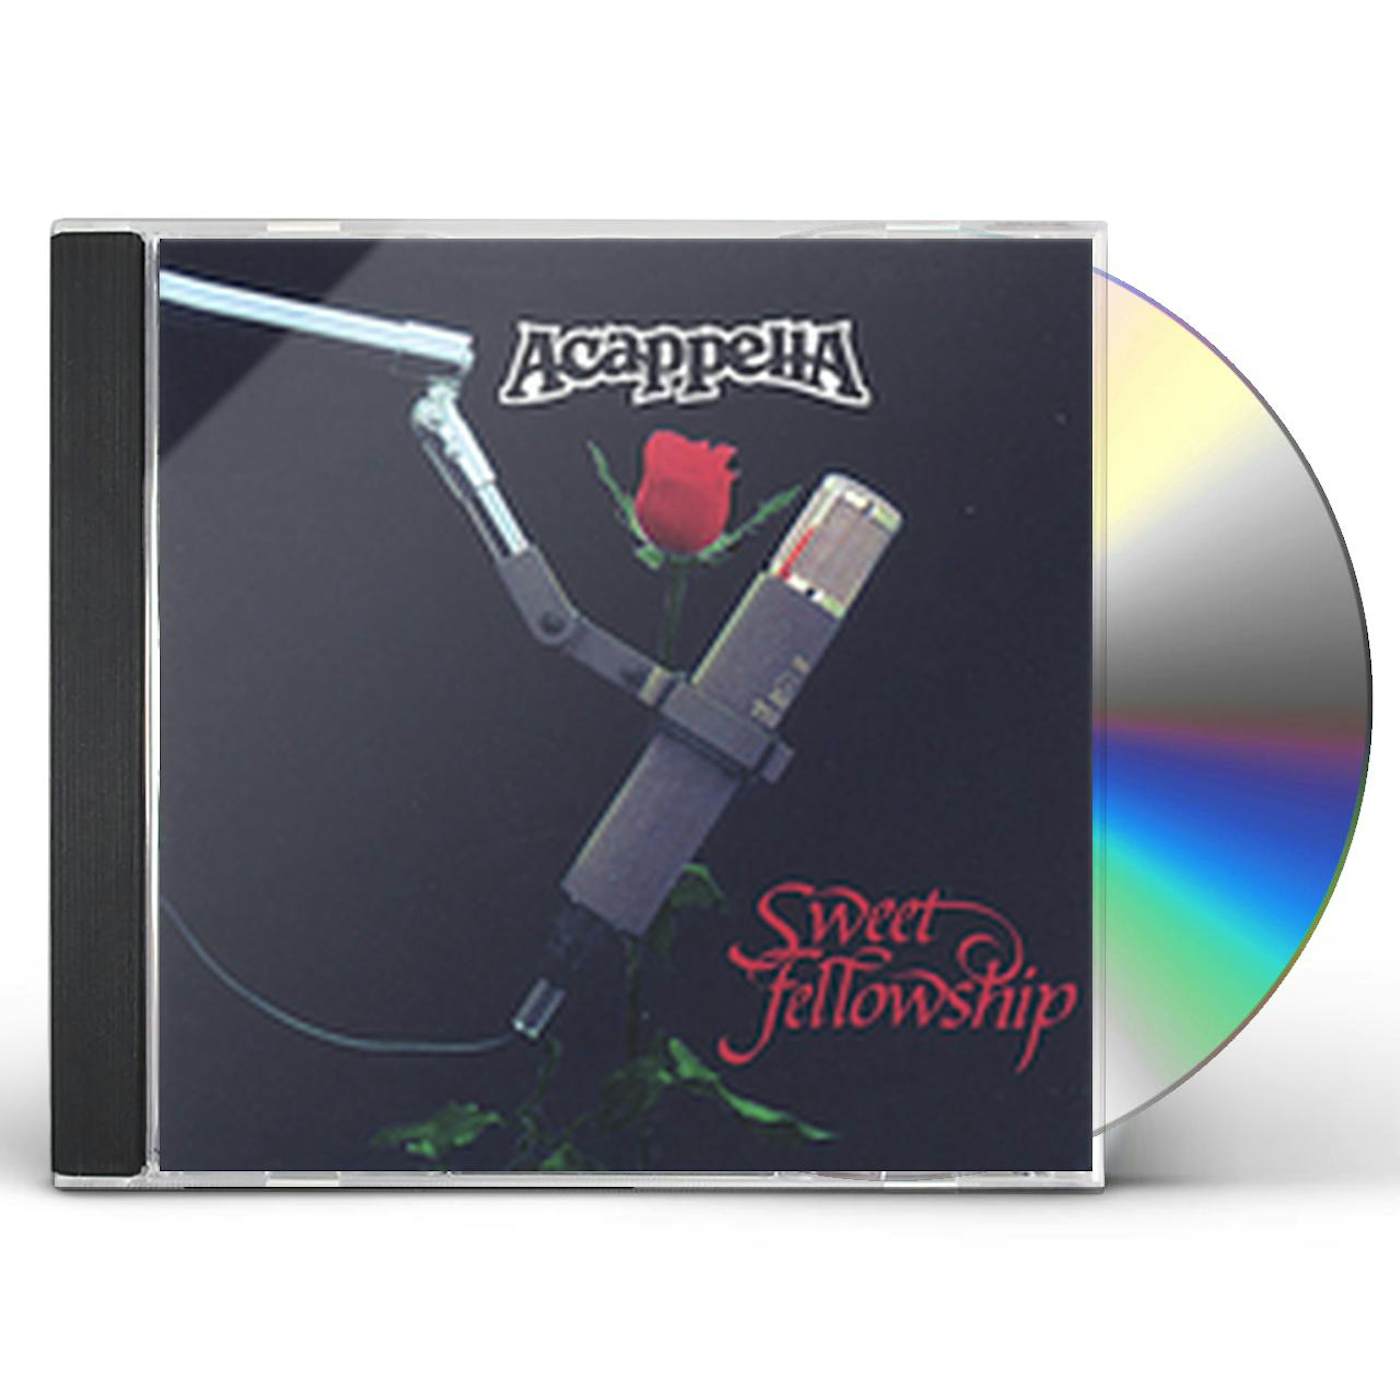 Acappella SWEET FELLOWSHIP CD